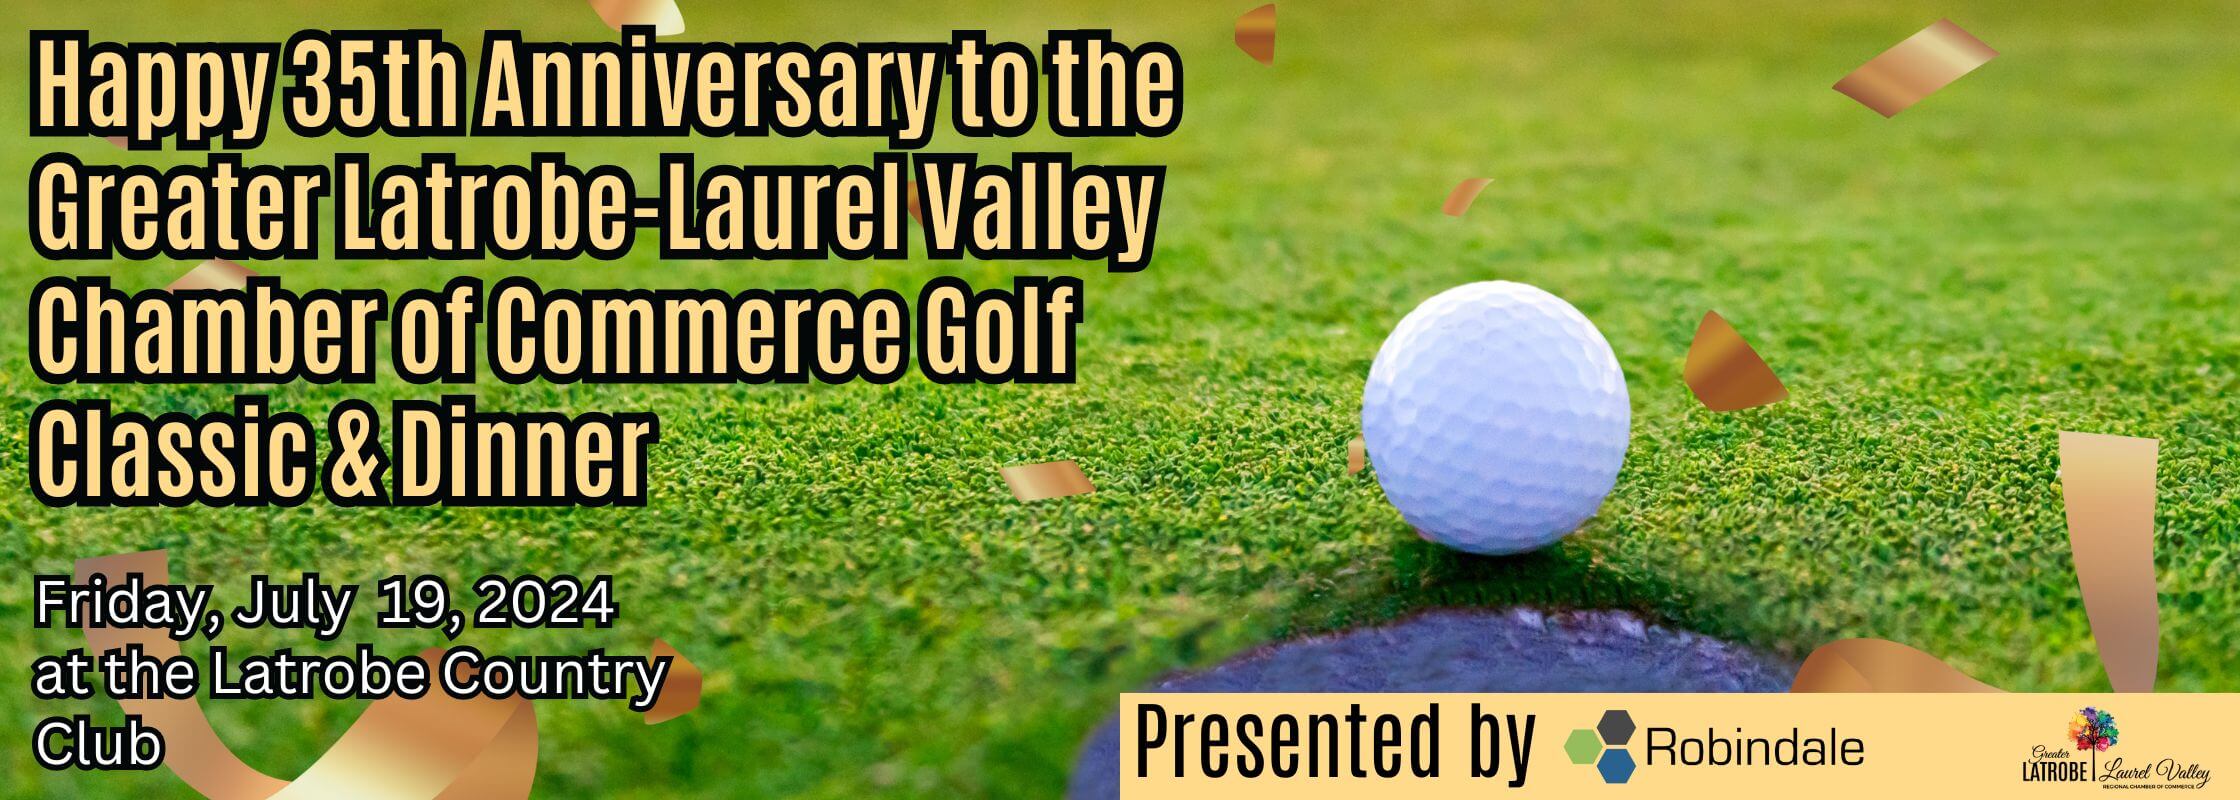 Golf Classic Web Banner (1)